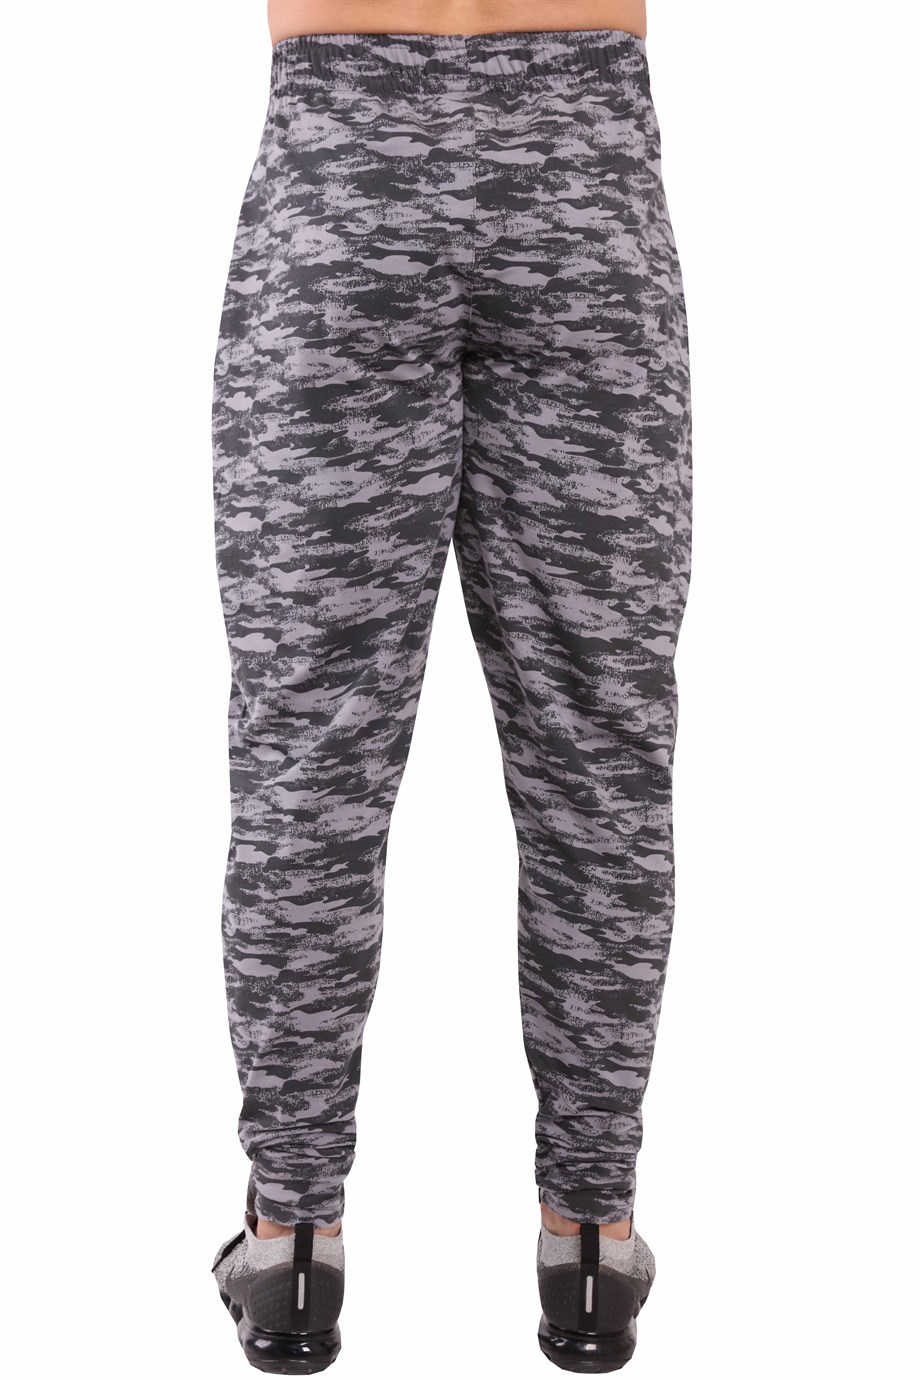 Men's Camouflage Baggy Lifestyle Gym Workout Pants | bigsam.com